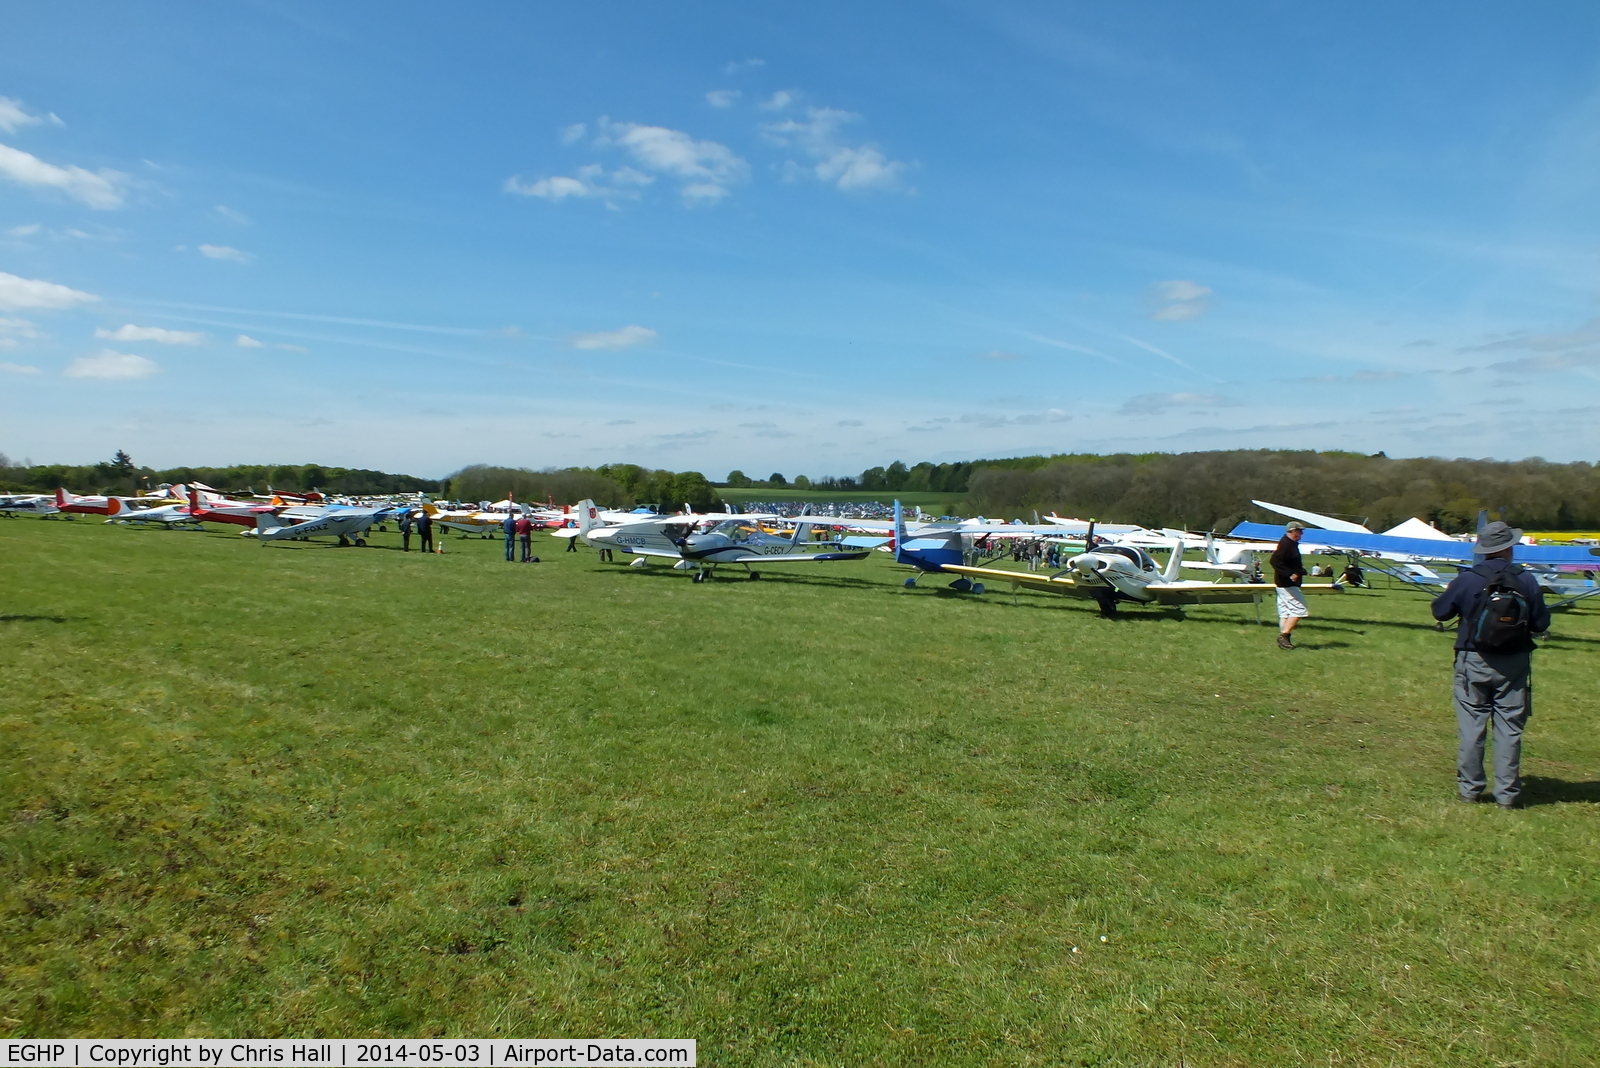 Popham Airfield Airport, Popham, England United Kingdom (EGHP) - 2014 Microlight Trade Fair, Popham